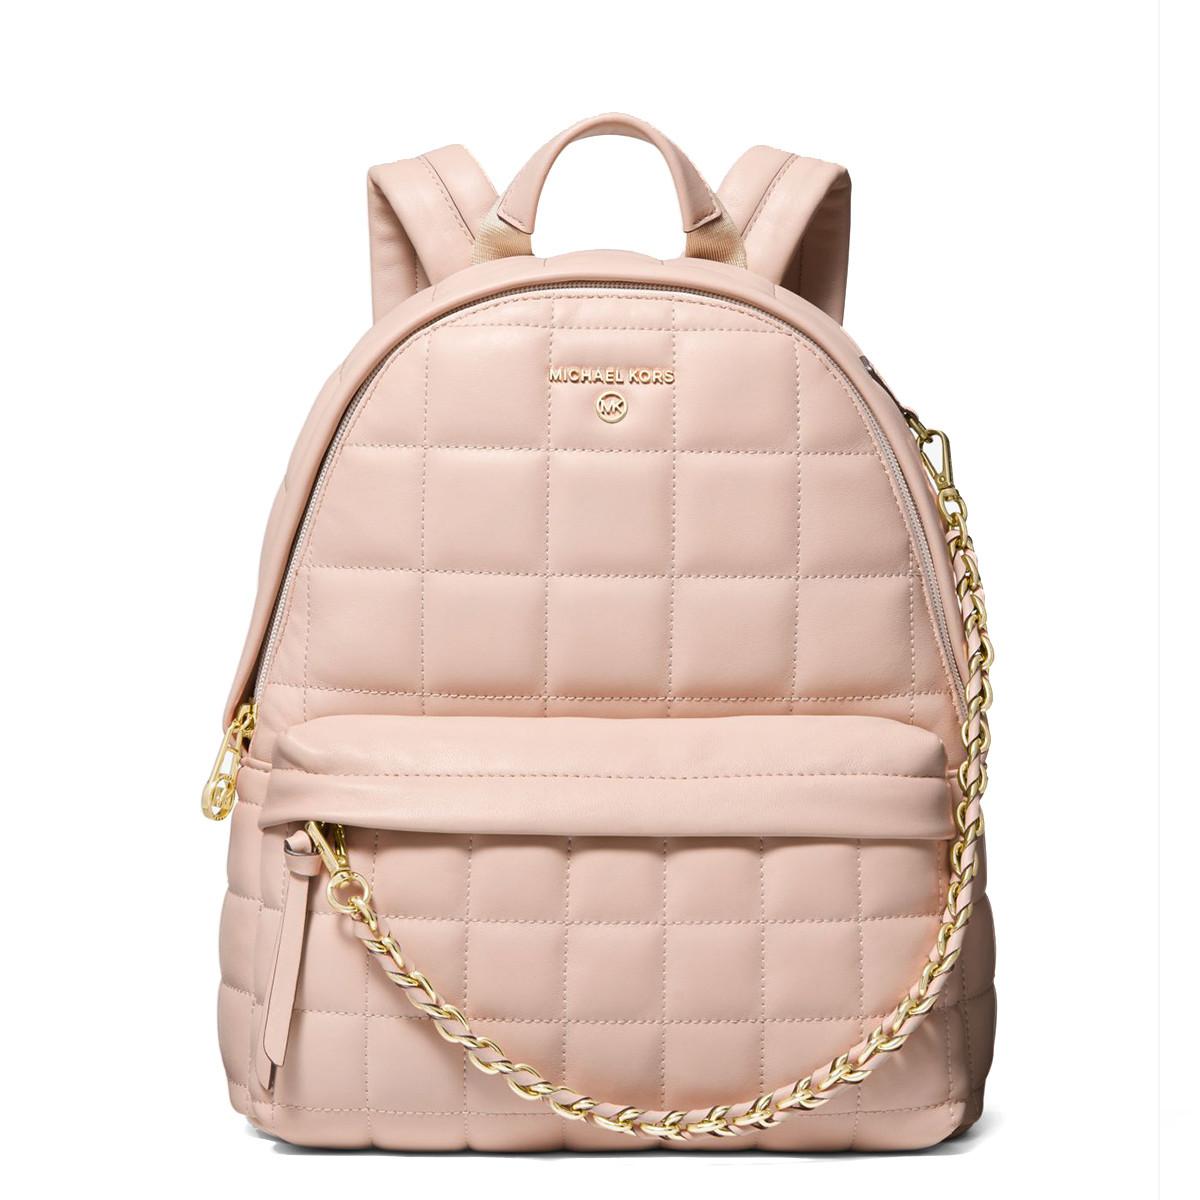 pink backpack michael kors